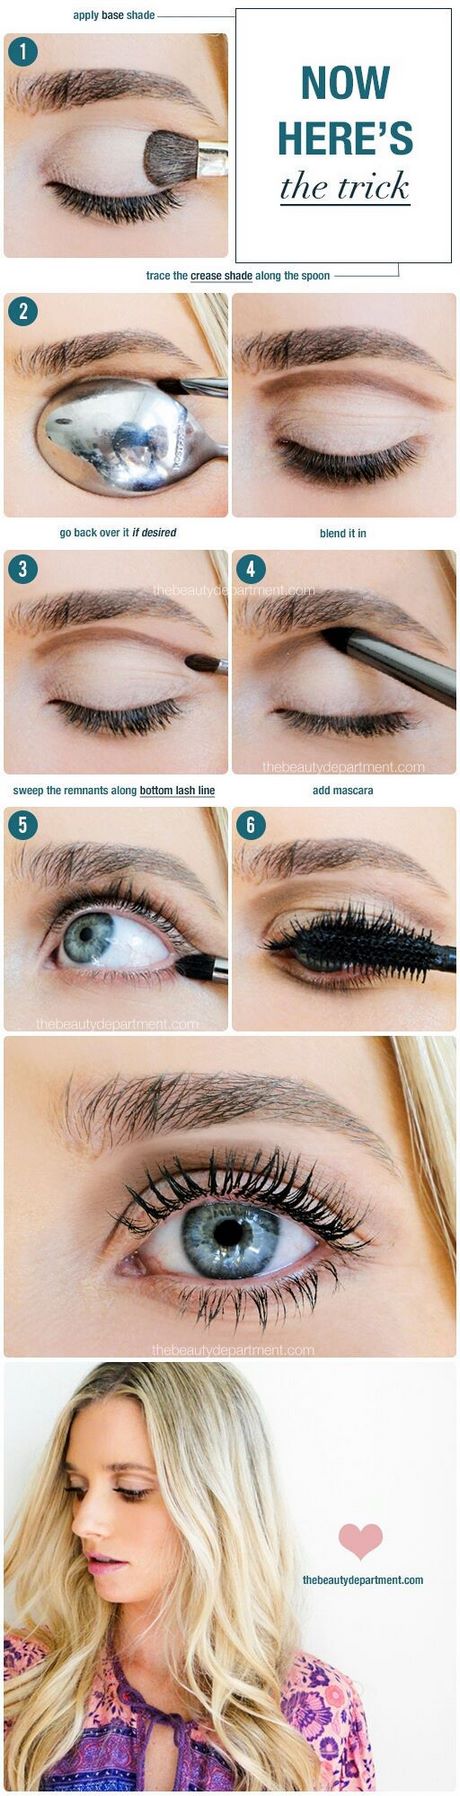 makeup-cut-crease-tutorial-37_19 Make-up cut crease tutorial